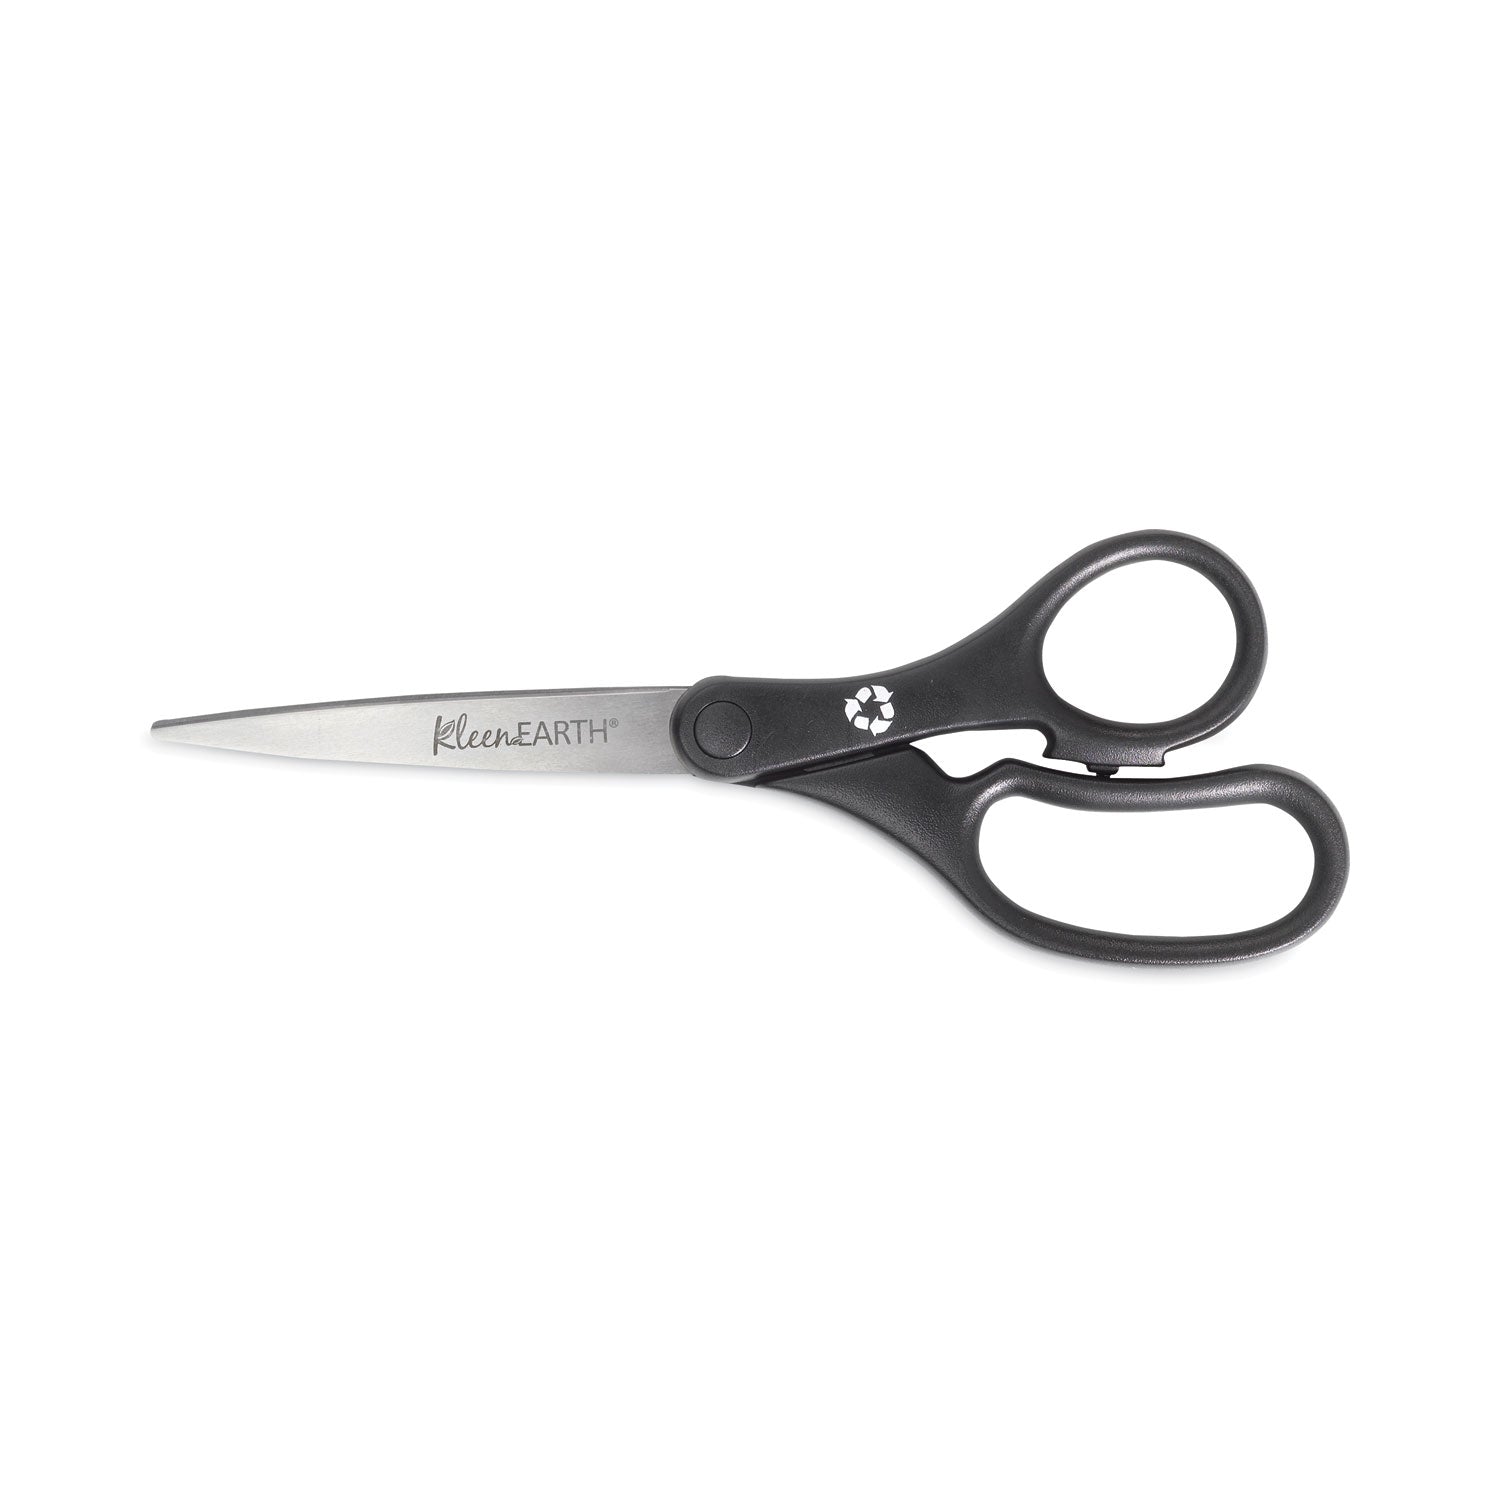 KleenEarth Basic Plastic Handle Scissors, 8" Long, 3.25" Cut Length, Black Straight Handle - 